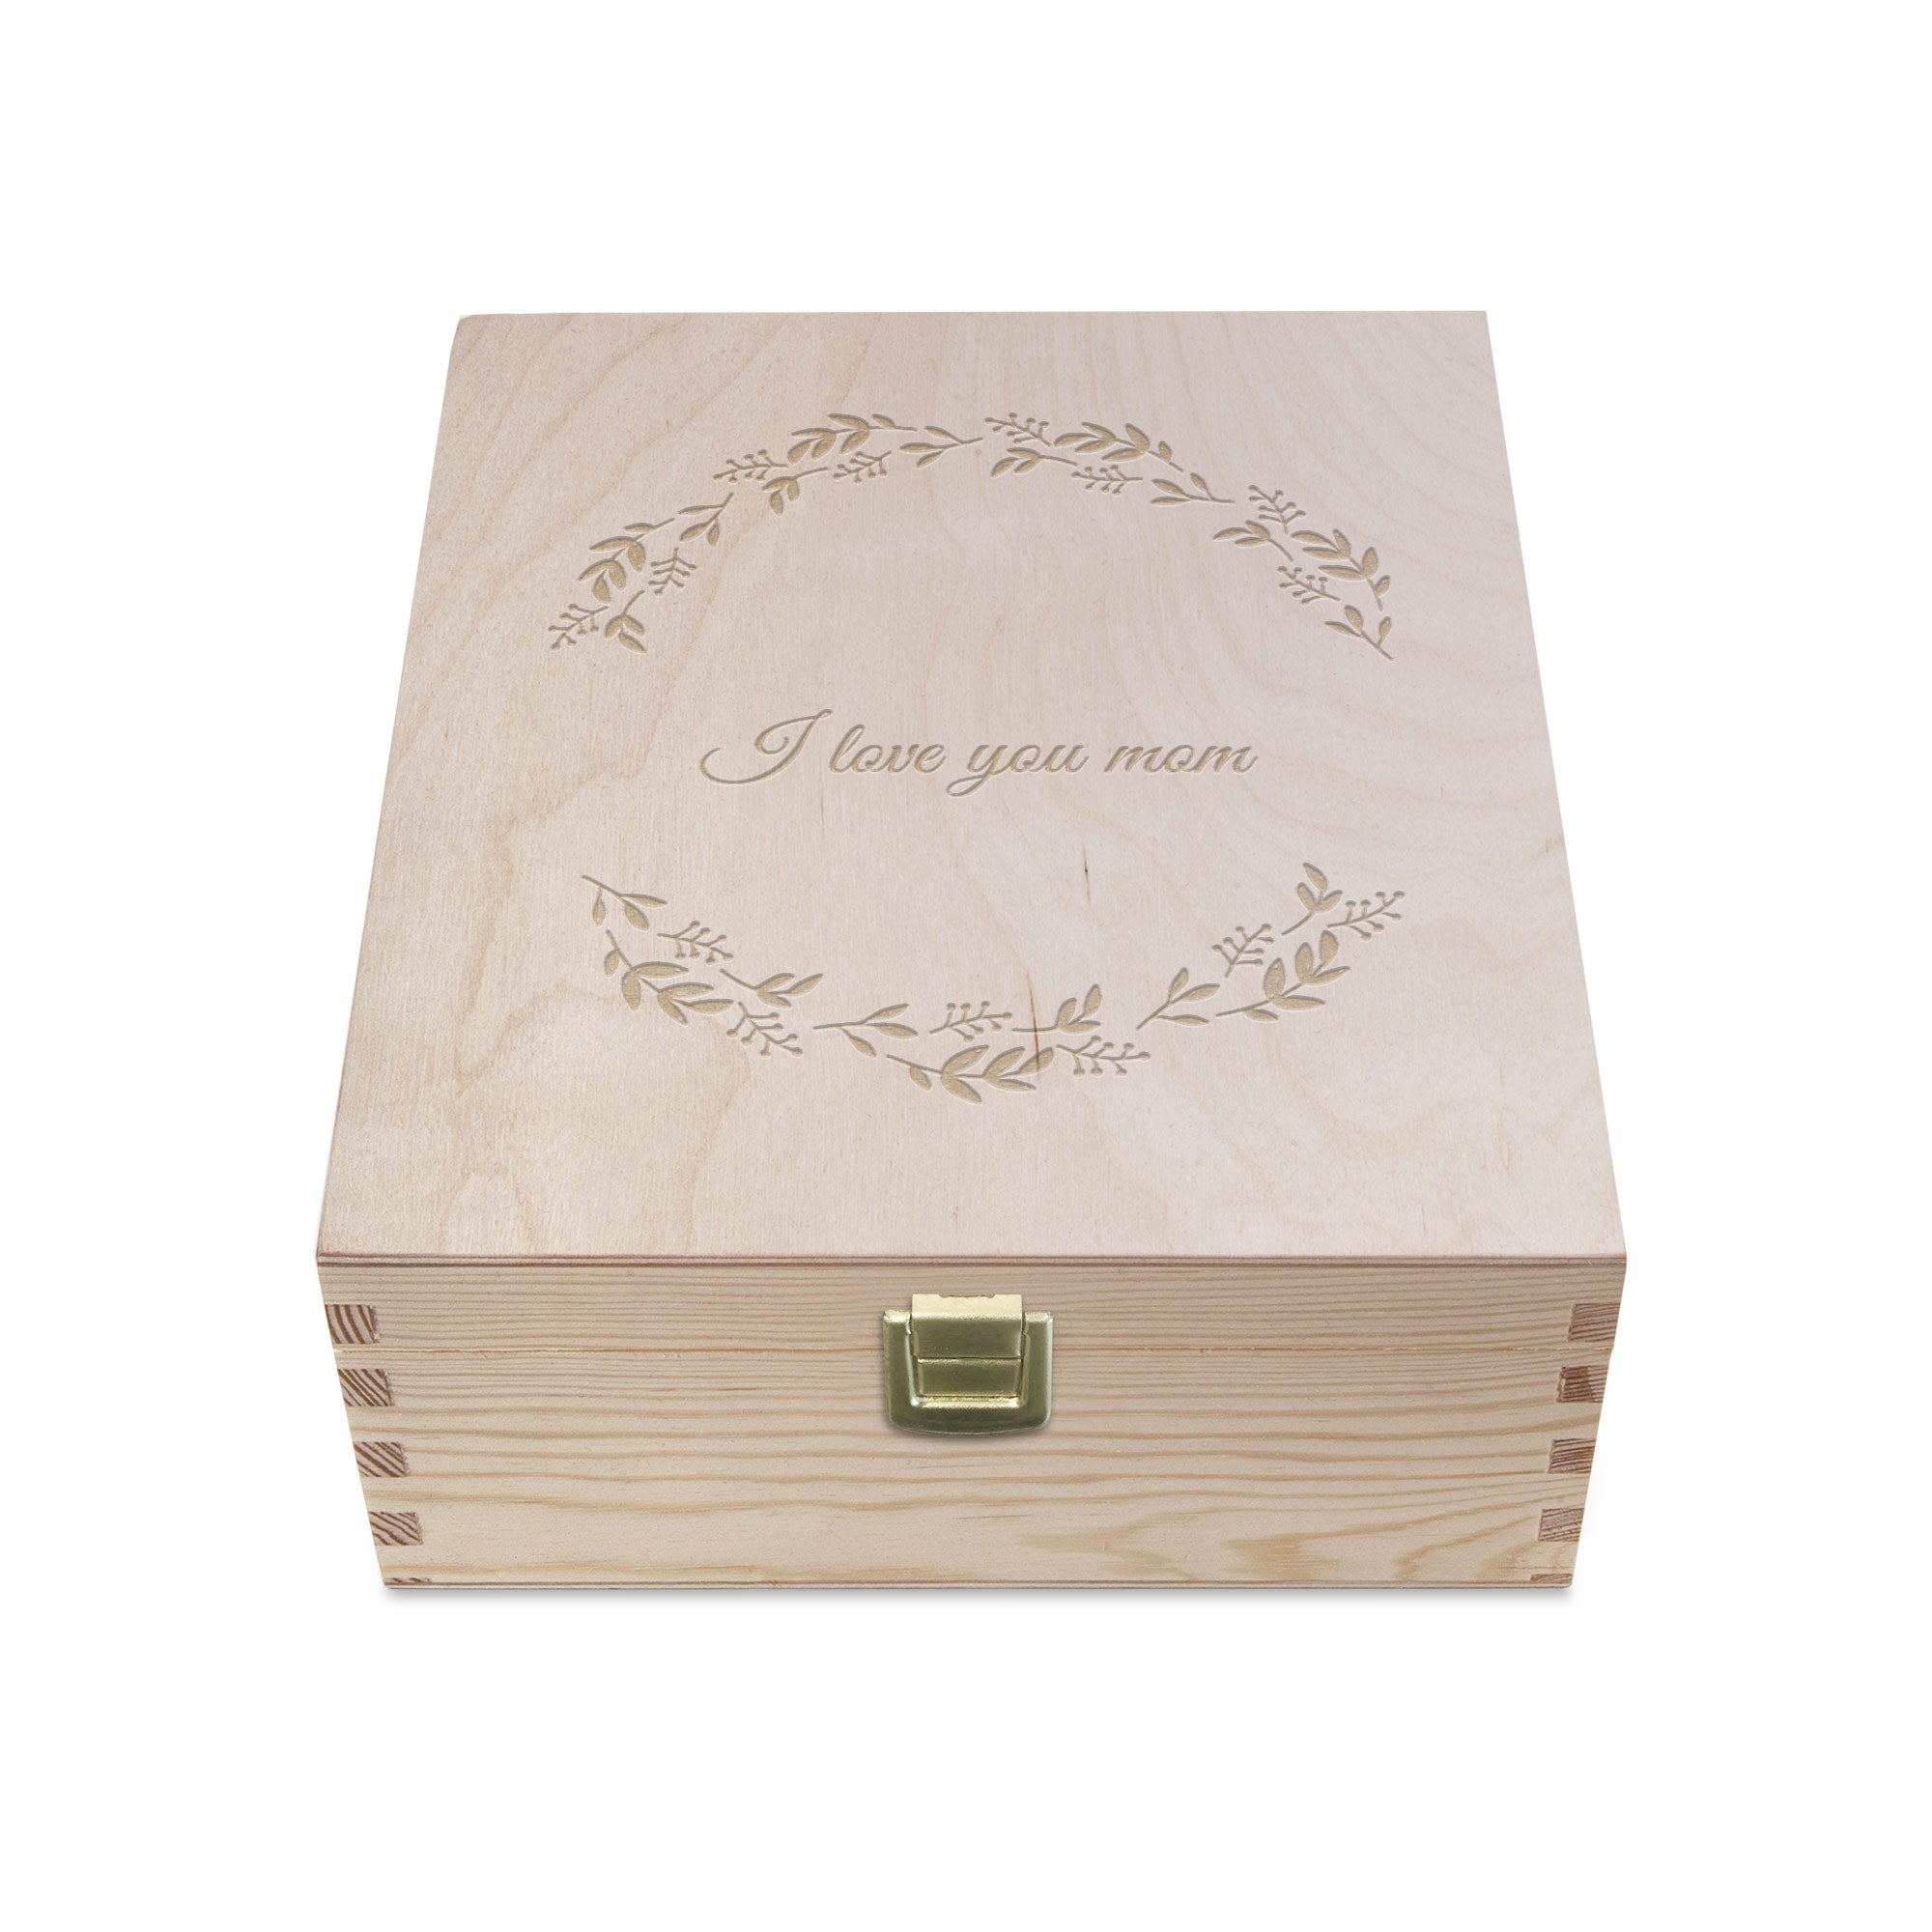 Personalised tea box - Beech - Engraved